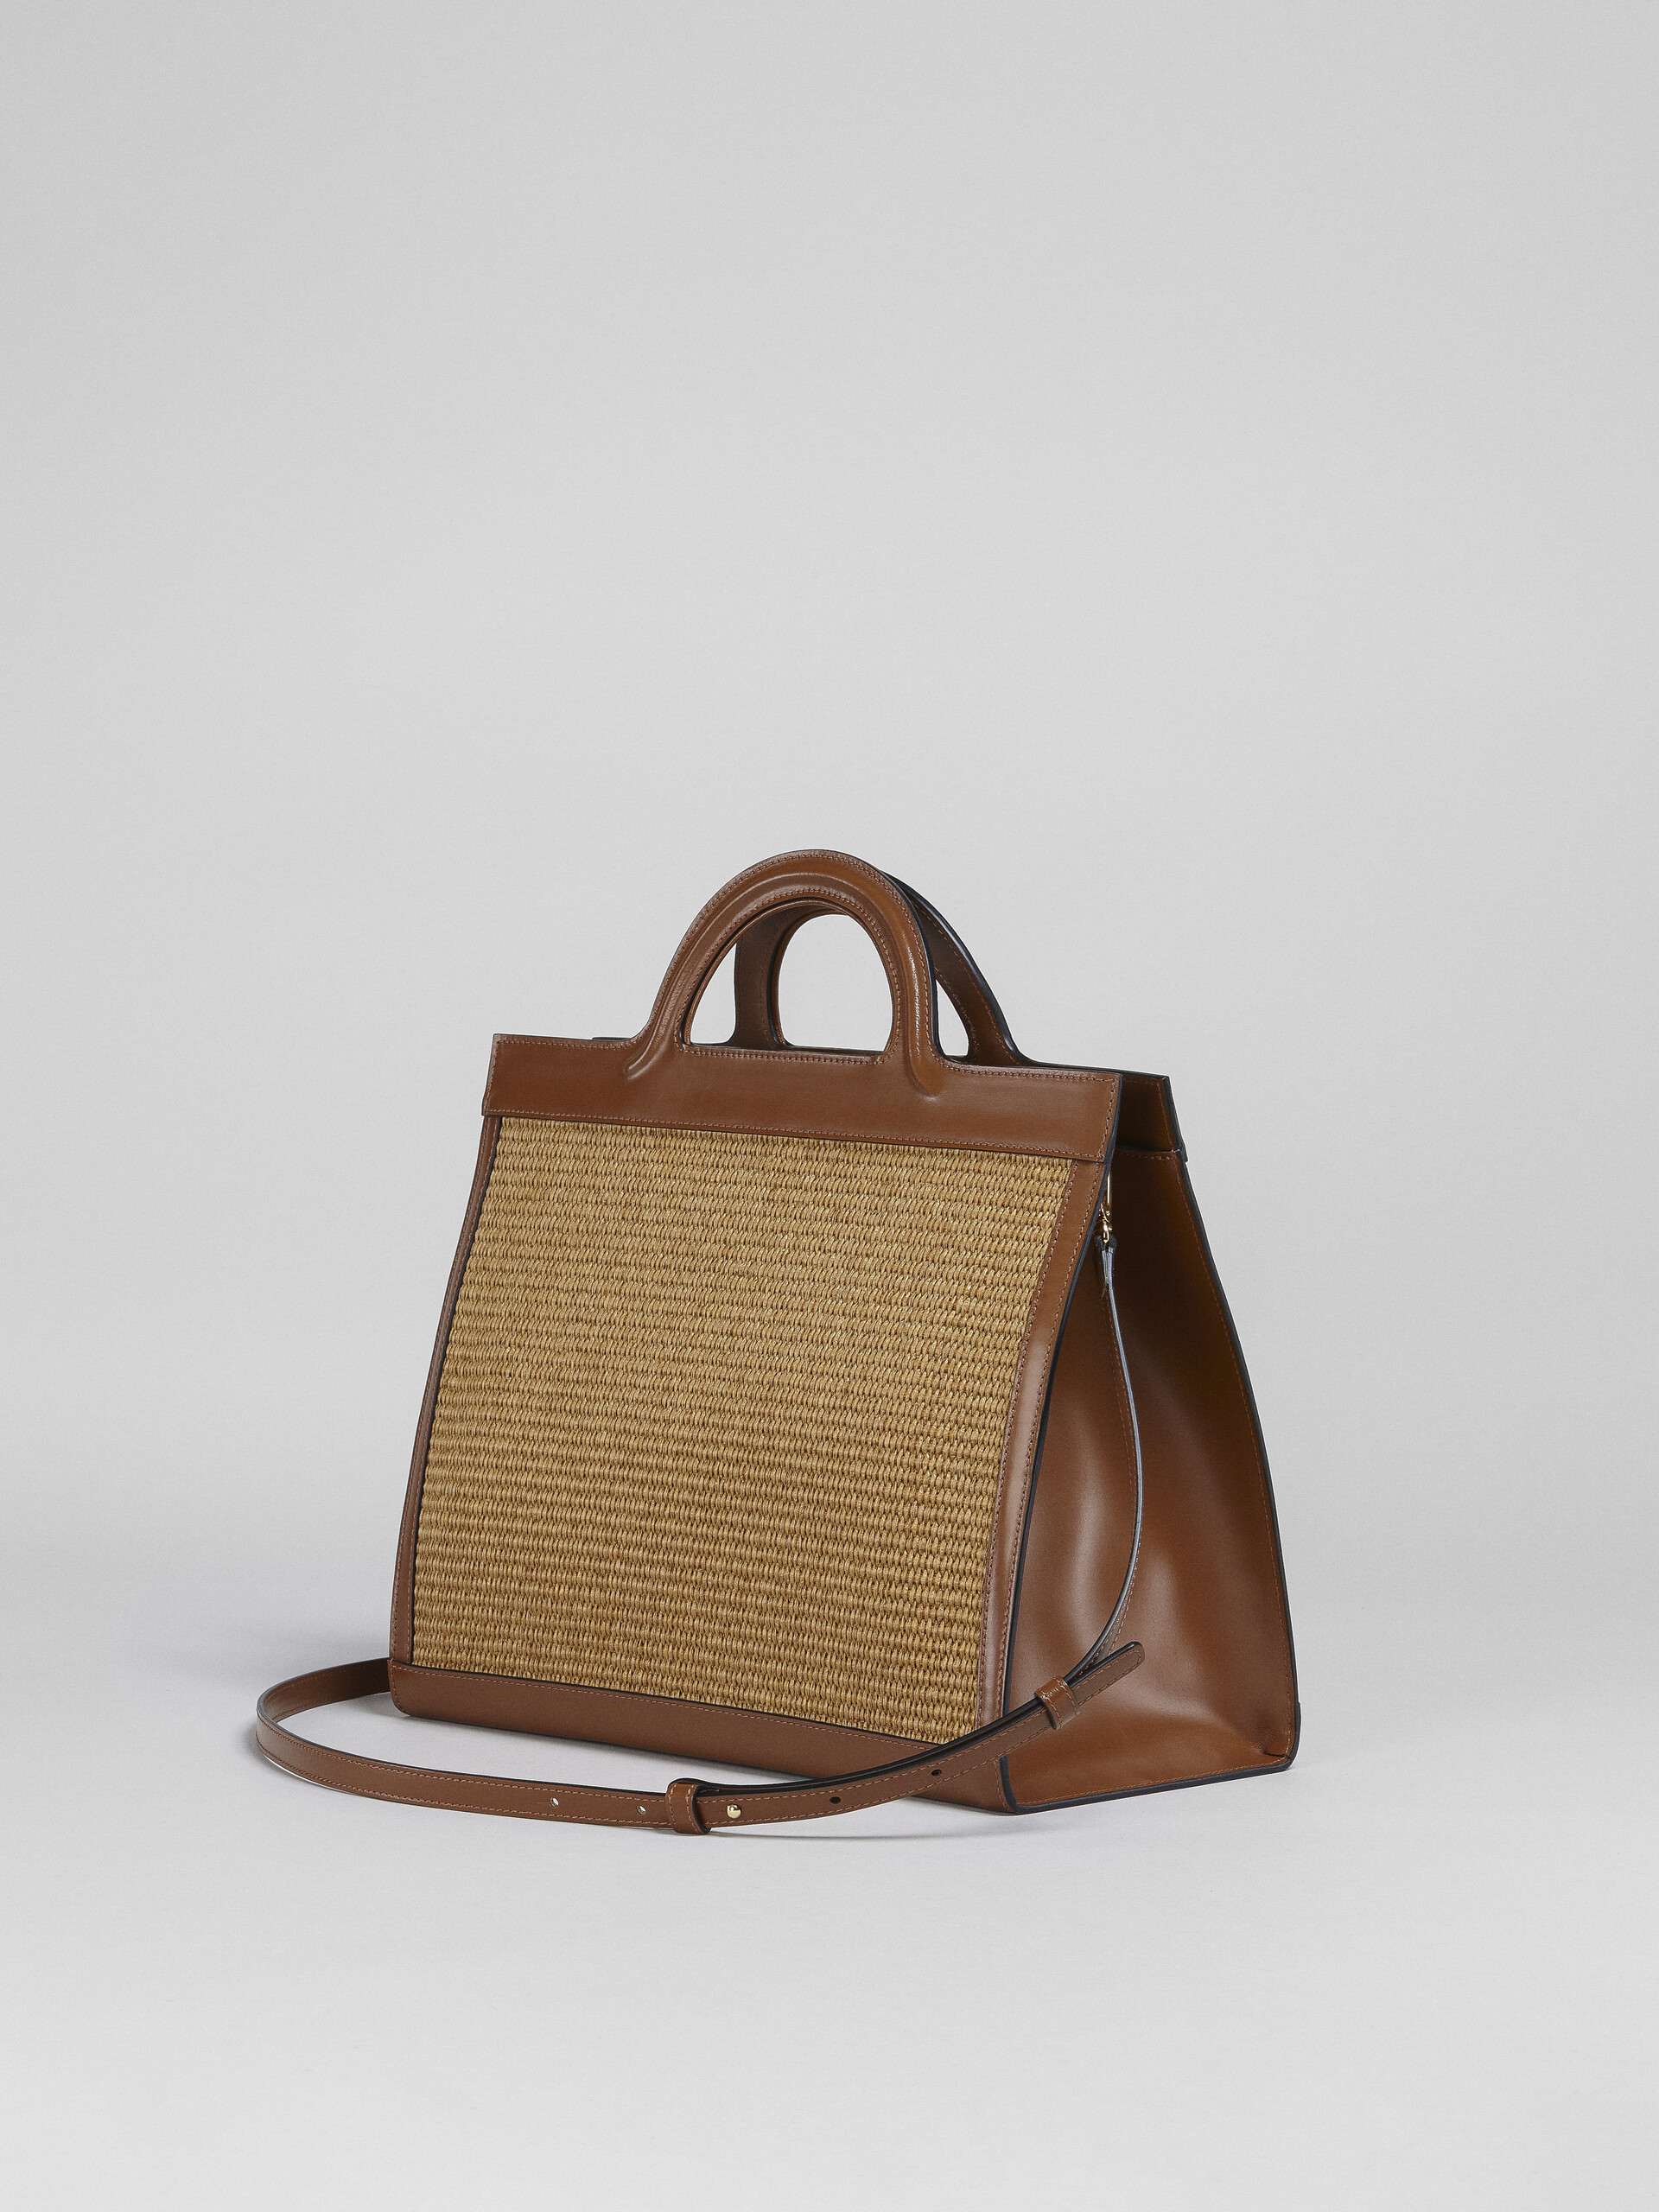 TROPICALIA tote bag in brown leather and raffia